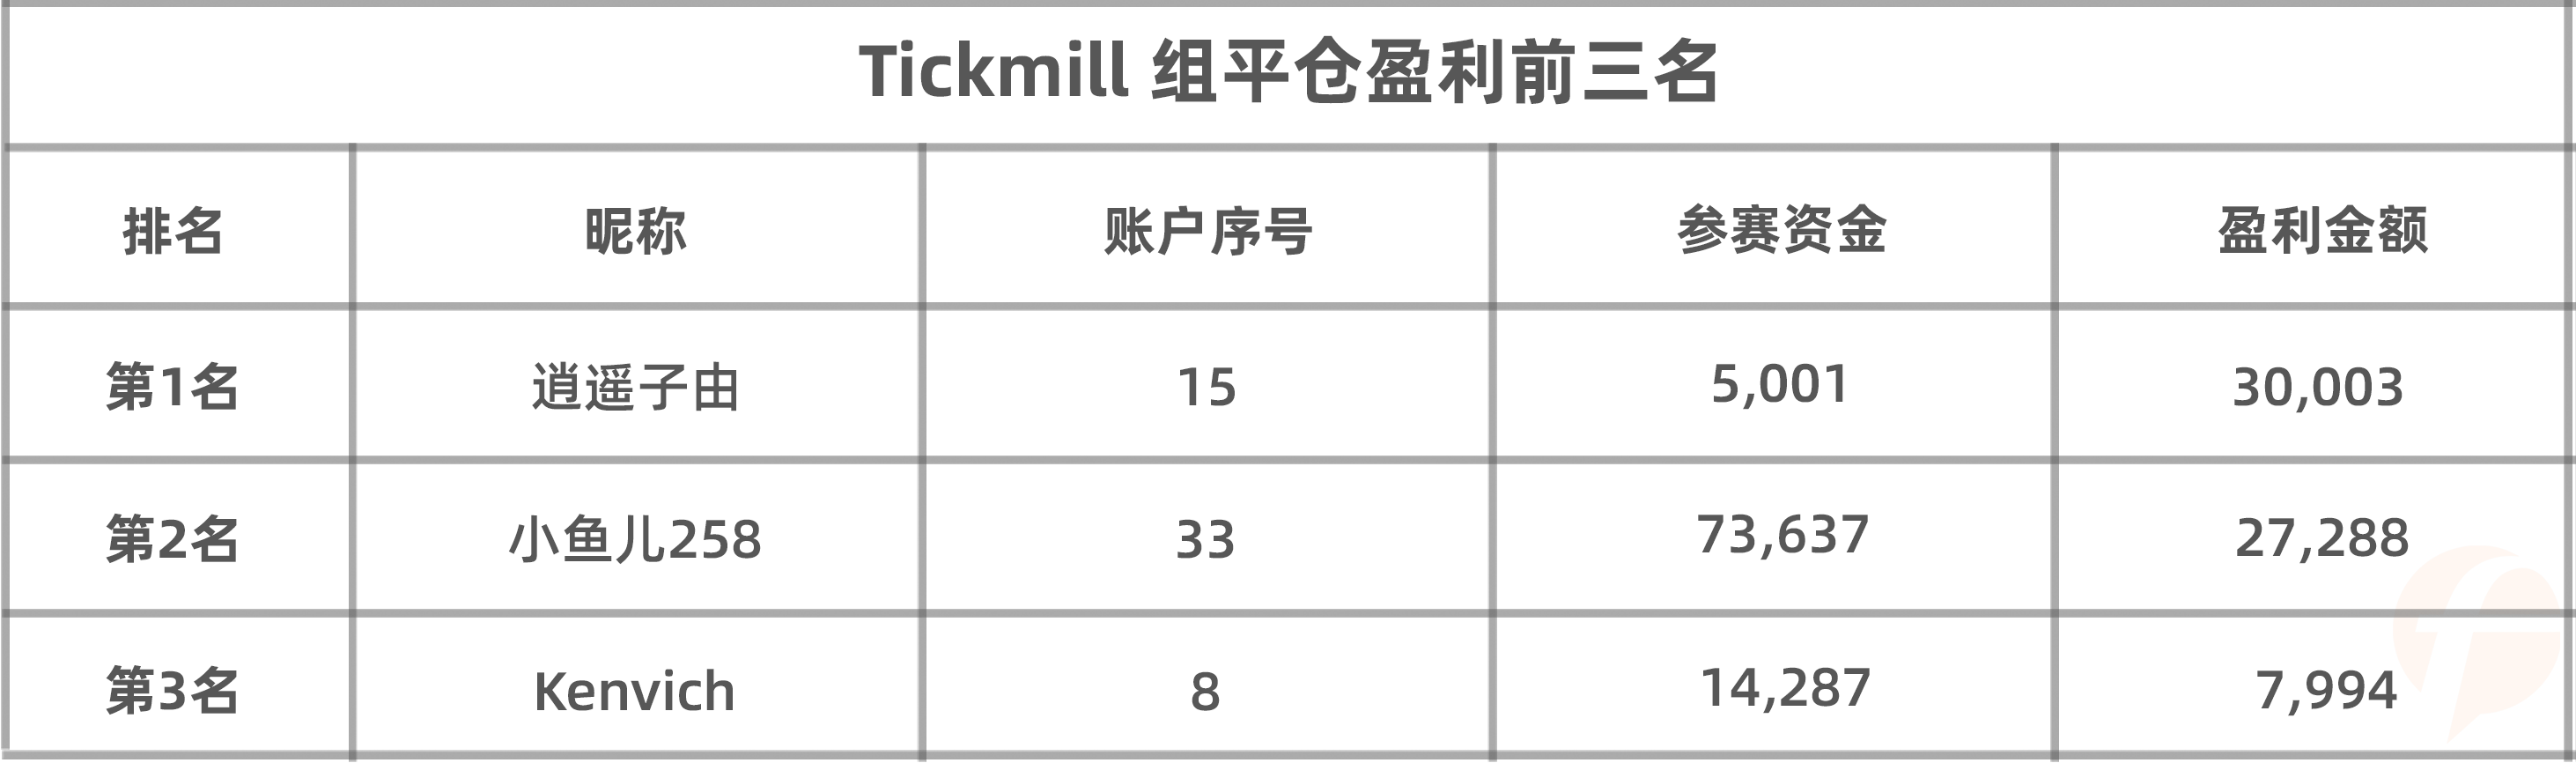 Tickmill 组表现出强大的战斗力，种子选手@逍遥子由 将有很大几率冲击5月轻量组冠军